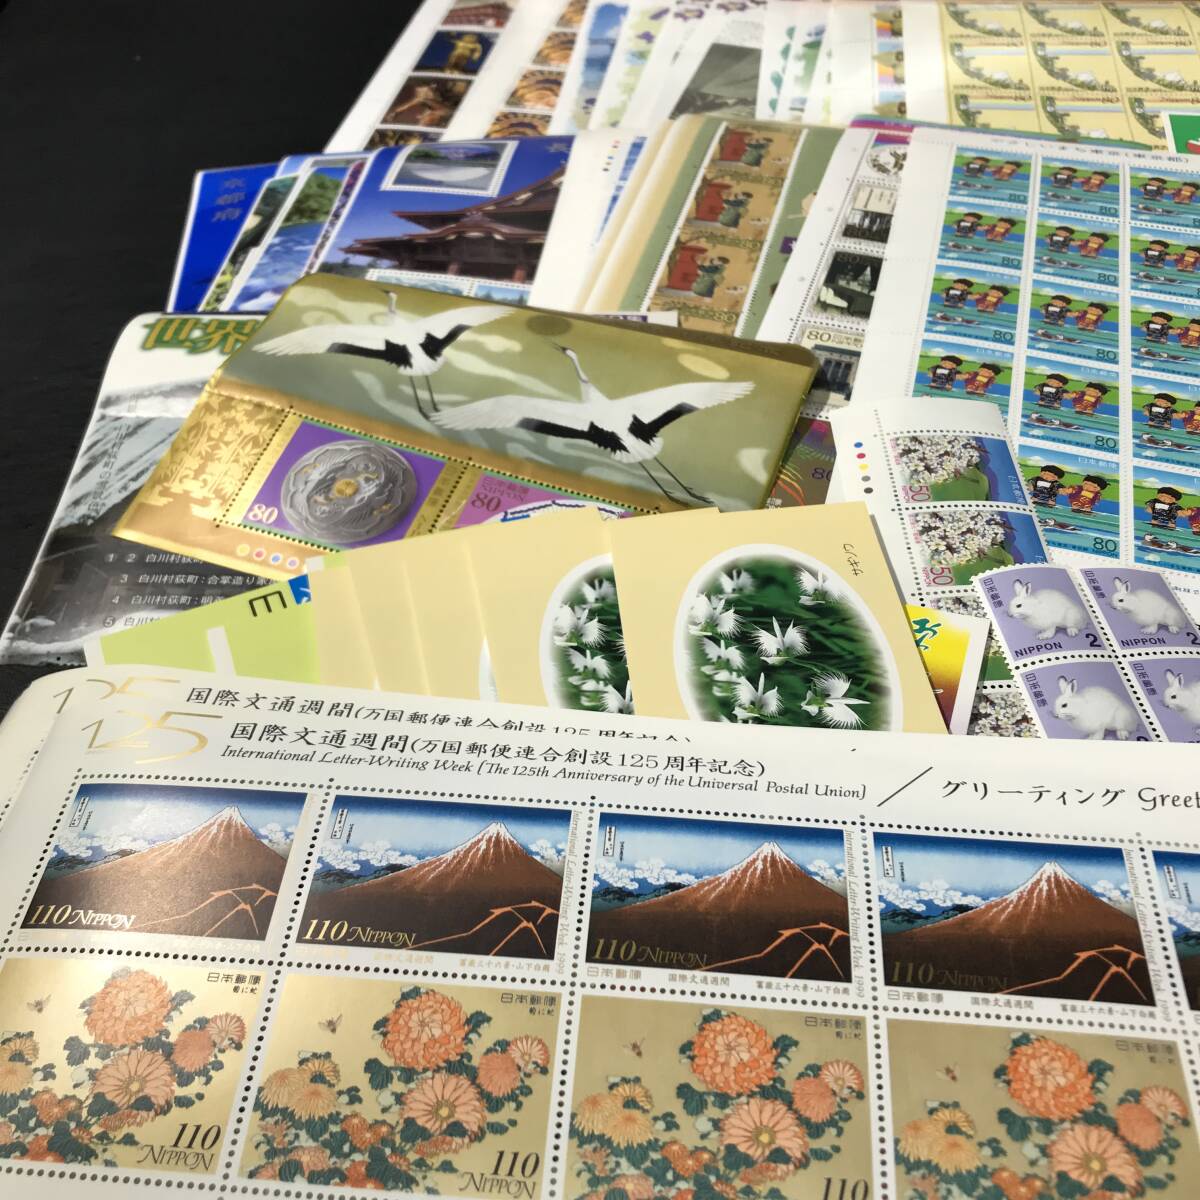 TG10 日本切手 未使用のみ 額面80118円分 シート 記念切手 まとめて_画像6